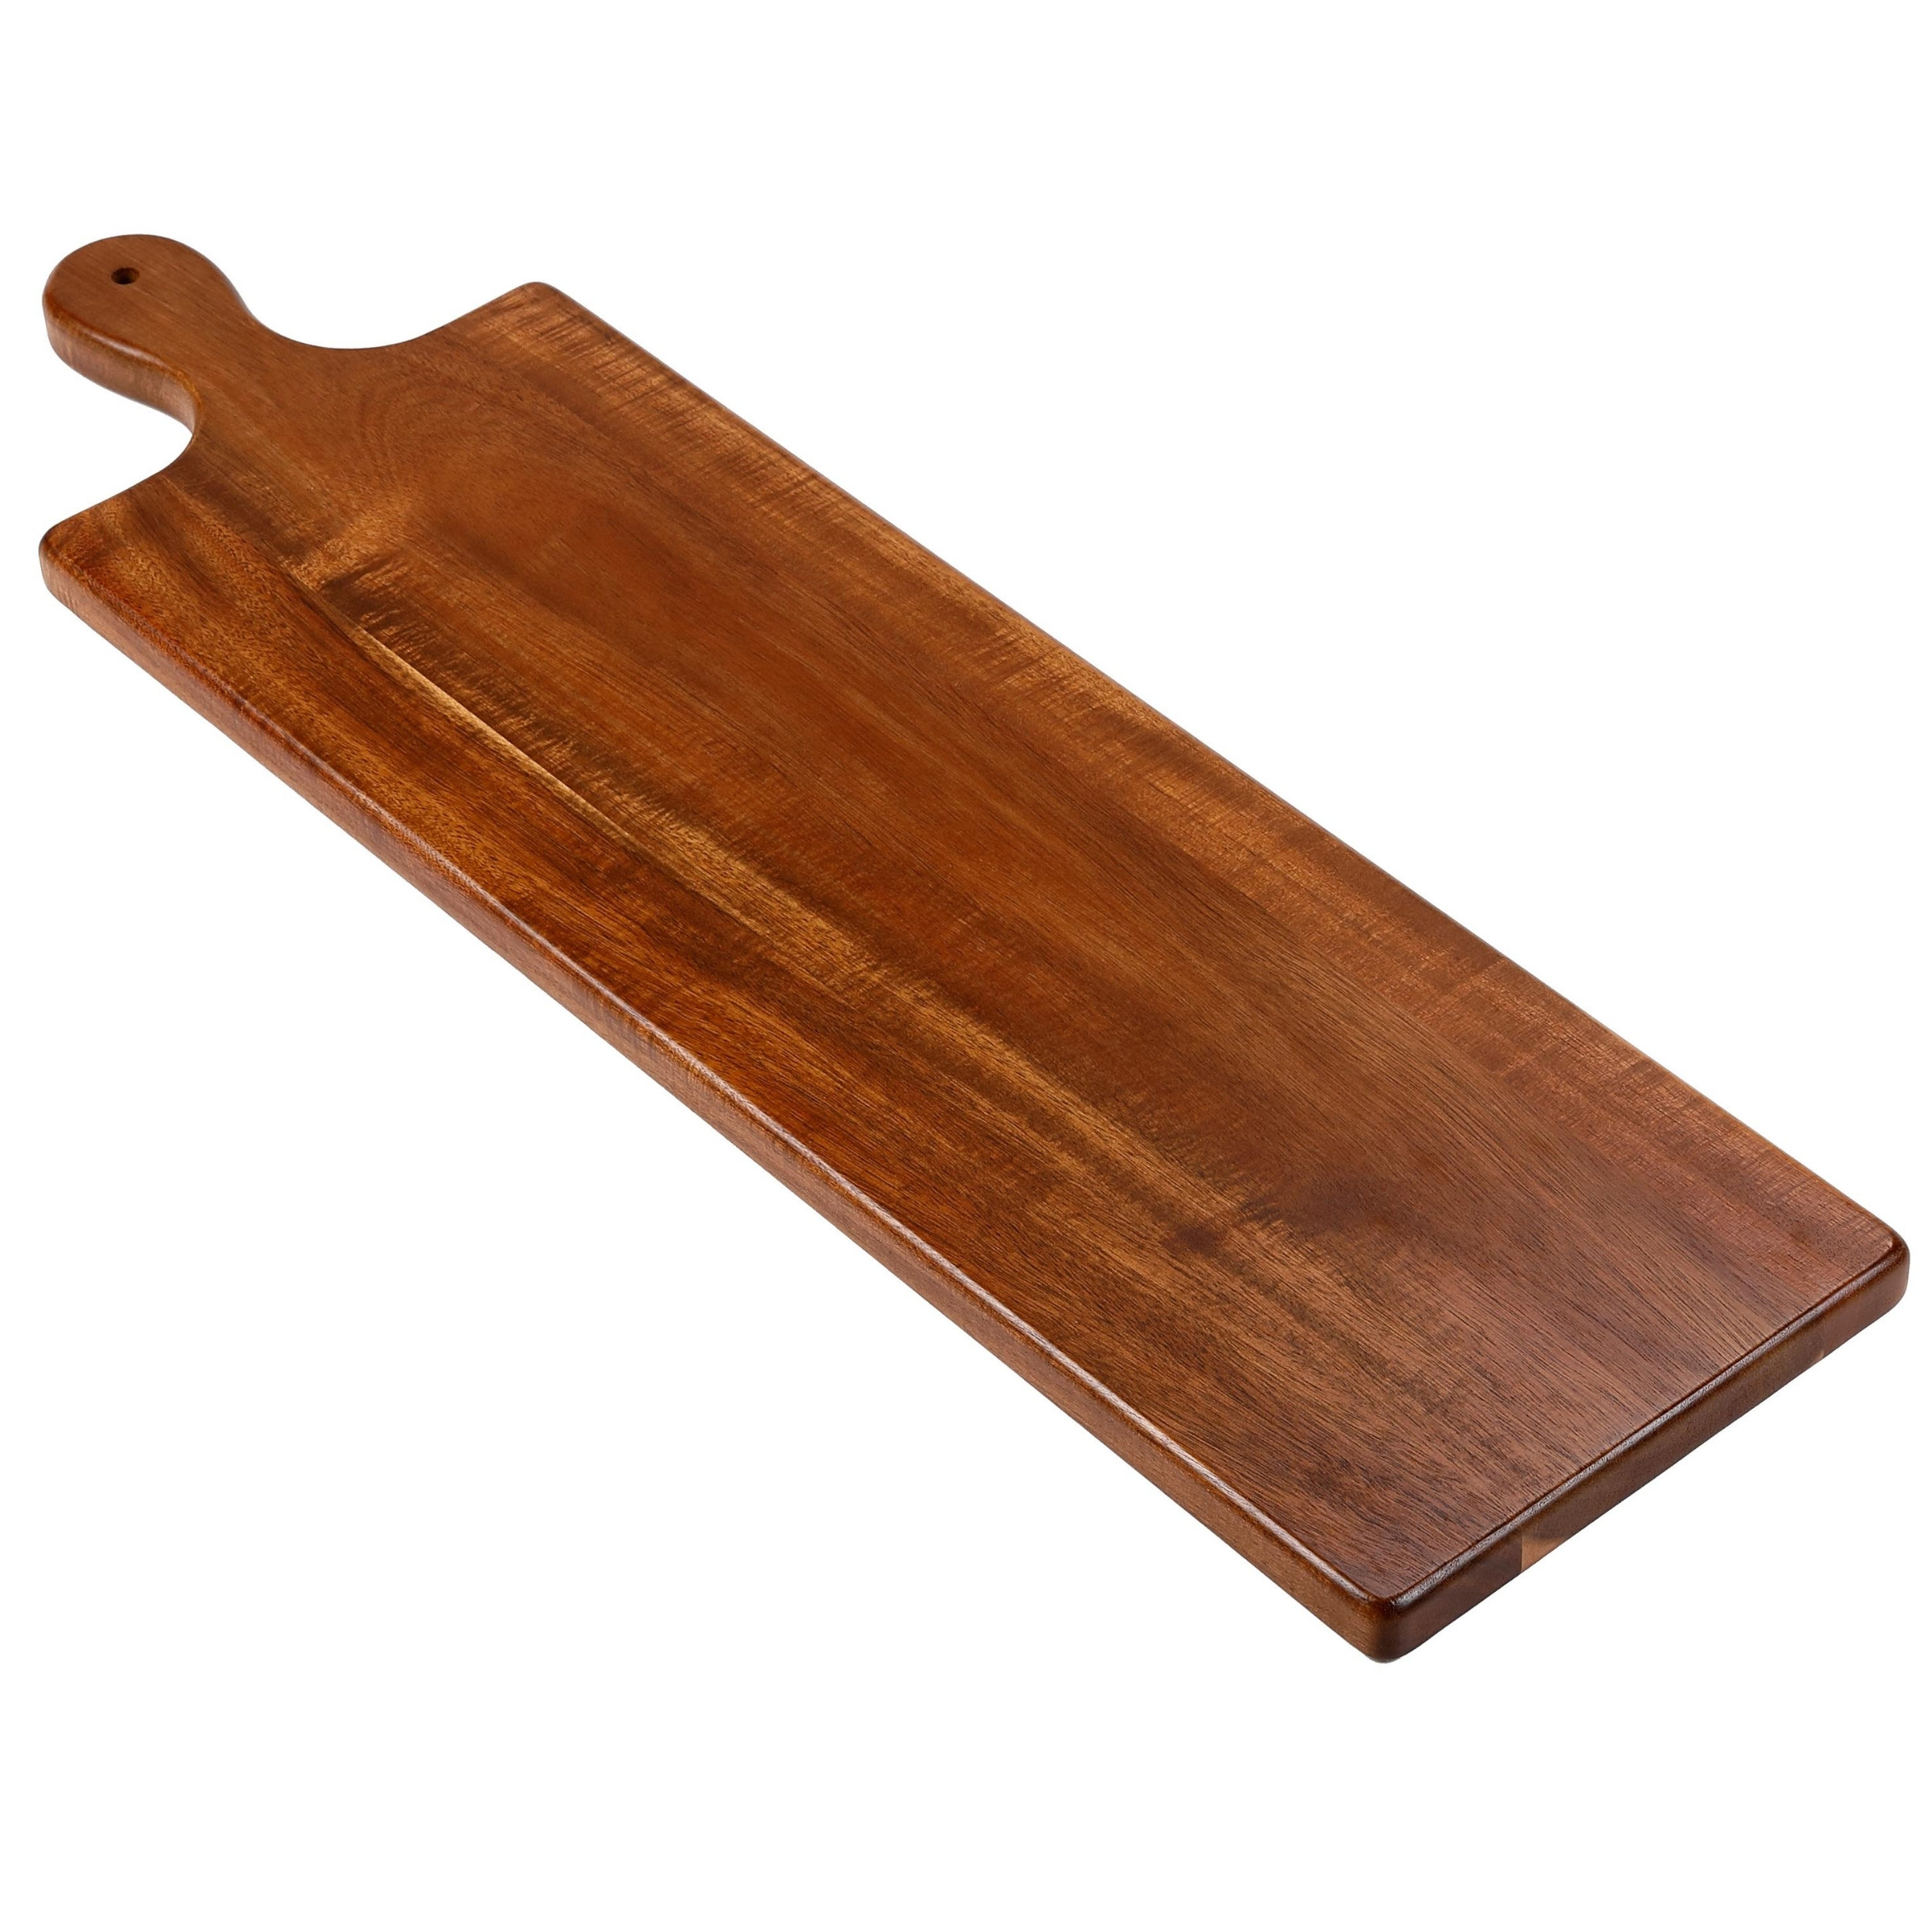 Fingerhut - Martha Stewart 2-Pc. Rubber Wood and Melamine Cutting Board  with Tray Set - Taupe